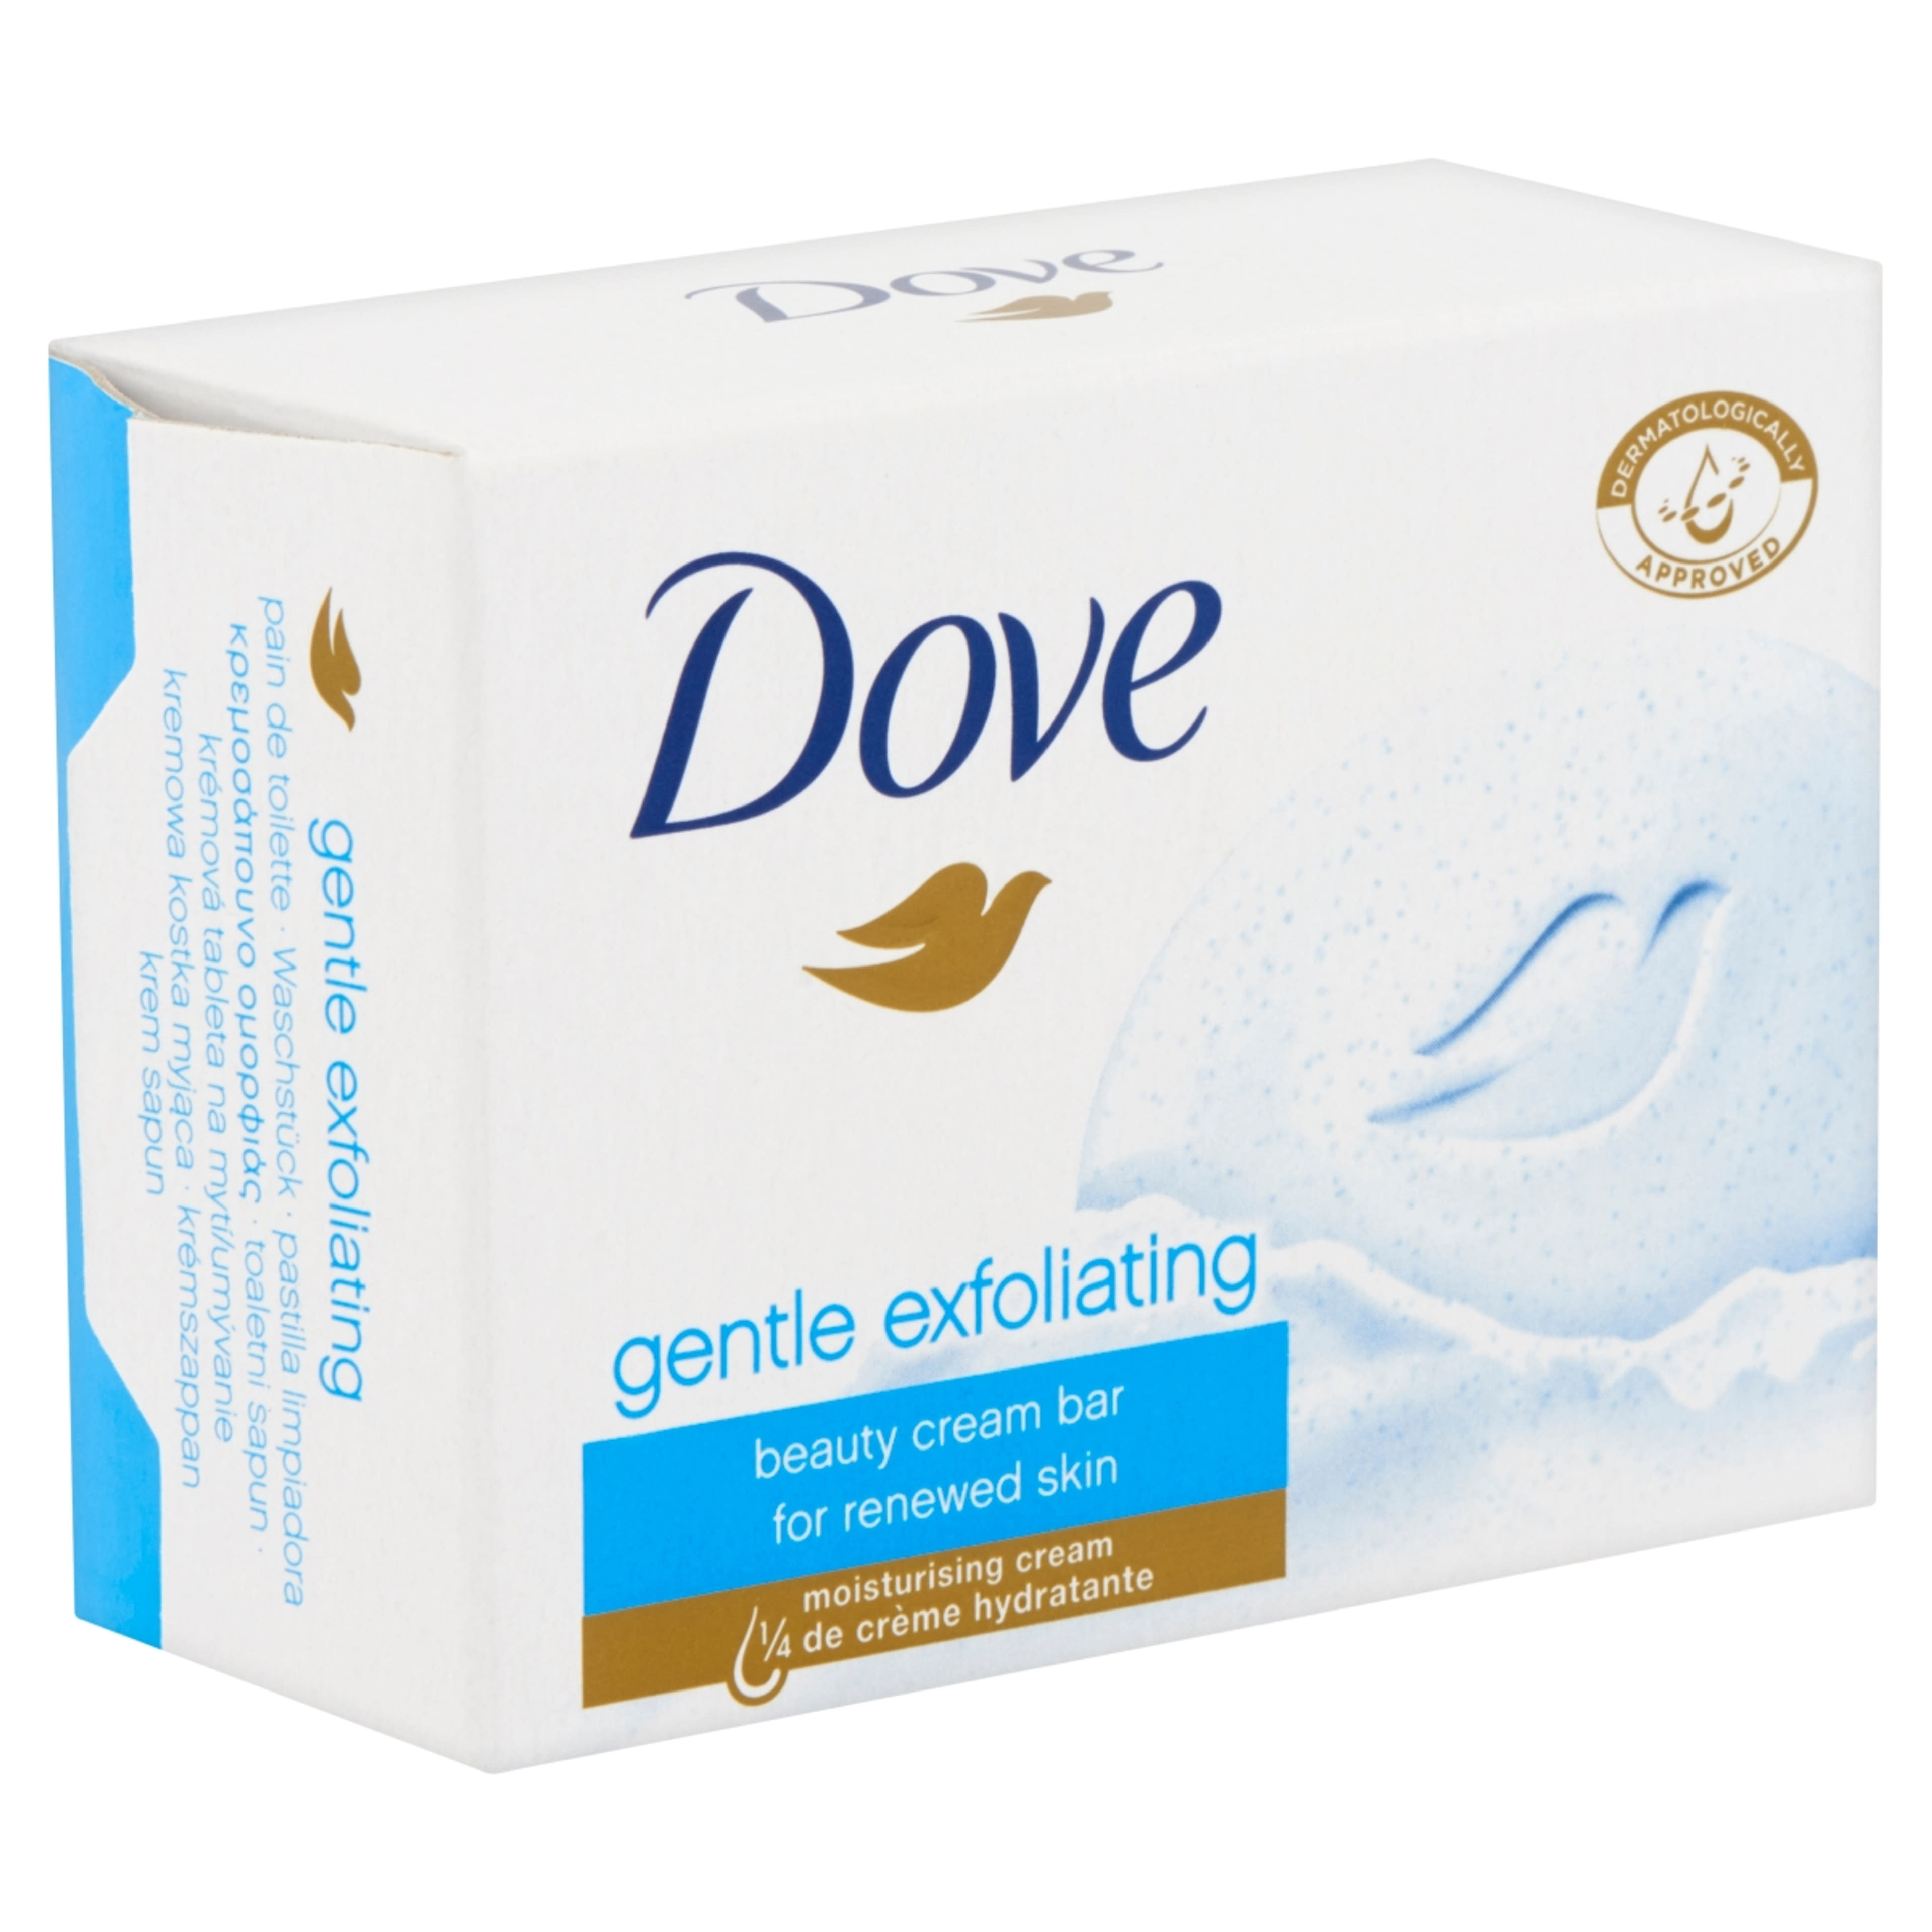 Dove Gentle Exfoliating szappan - 100 g-2